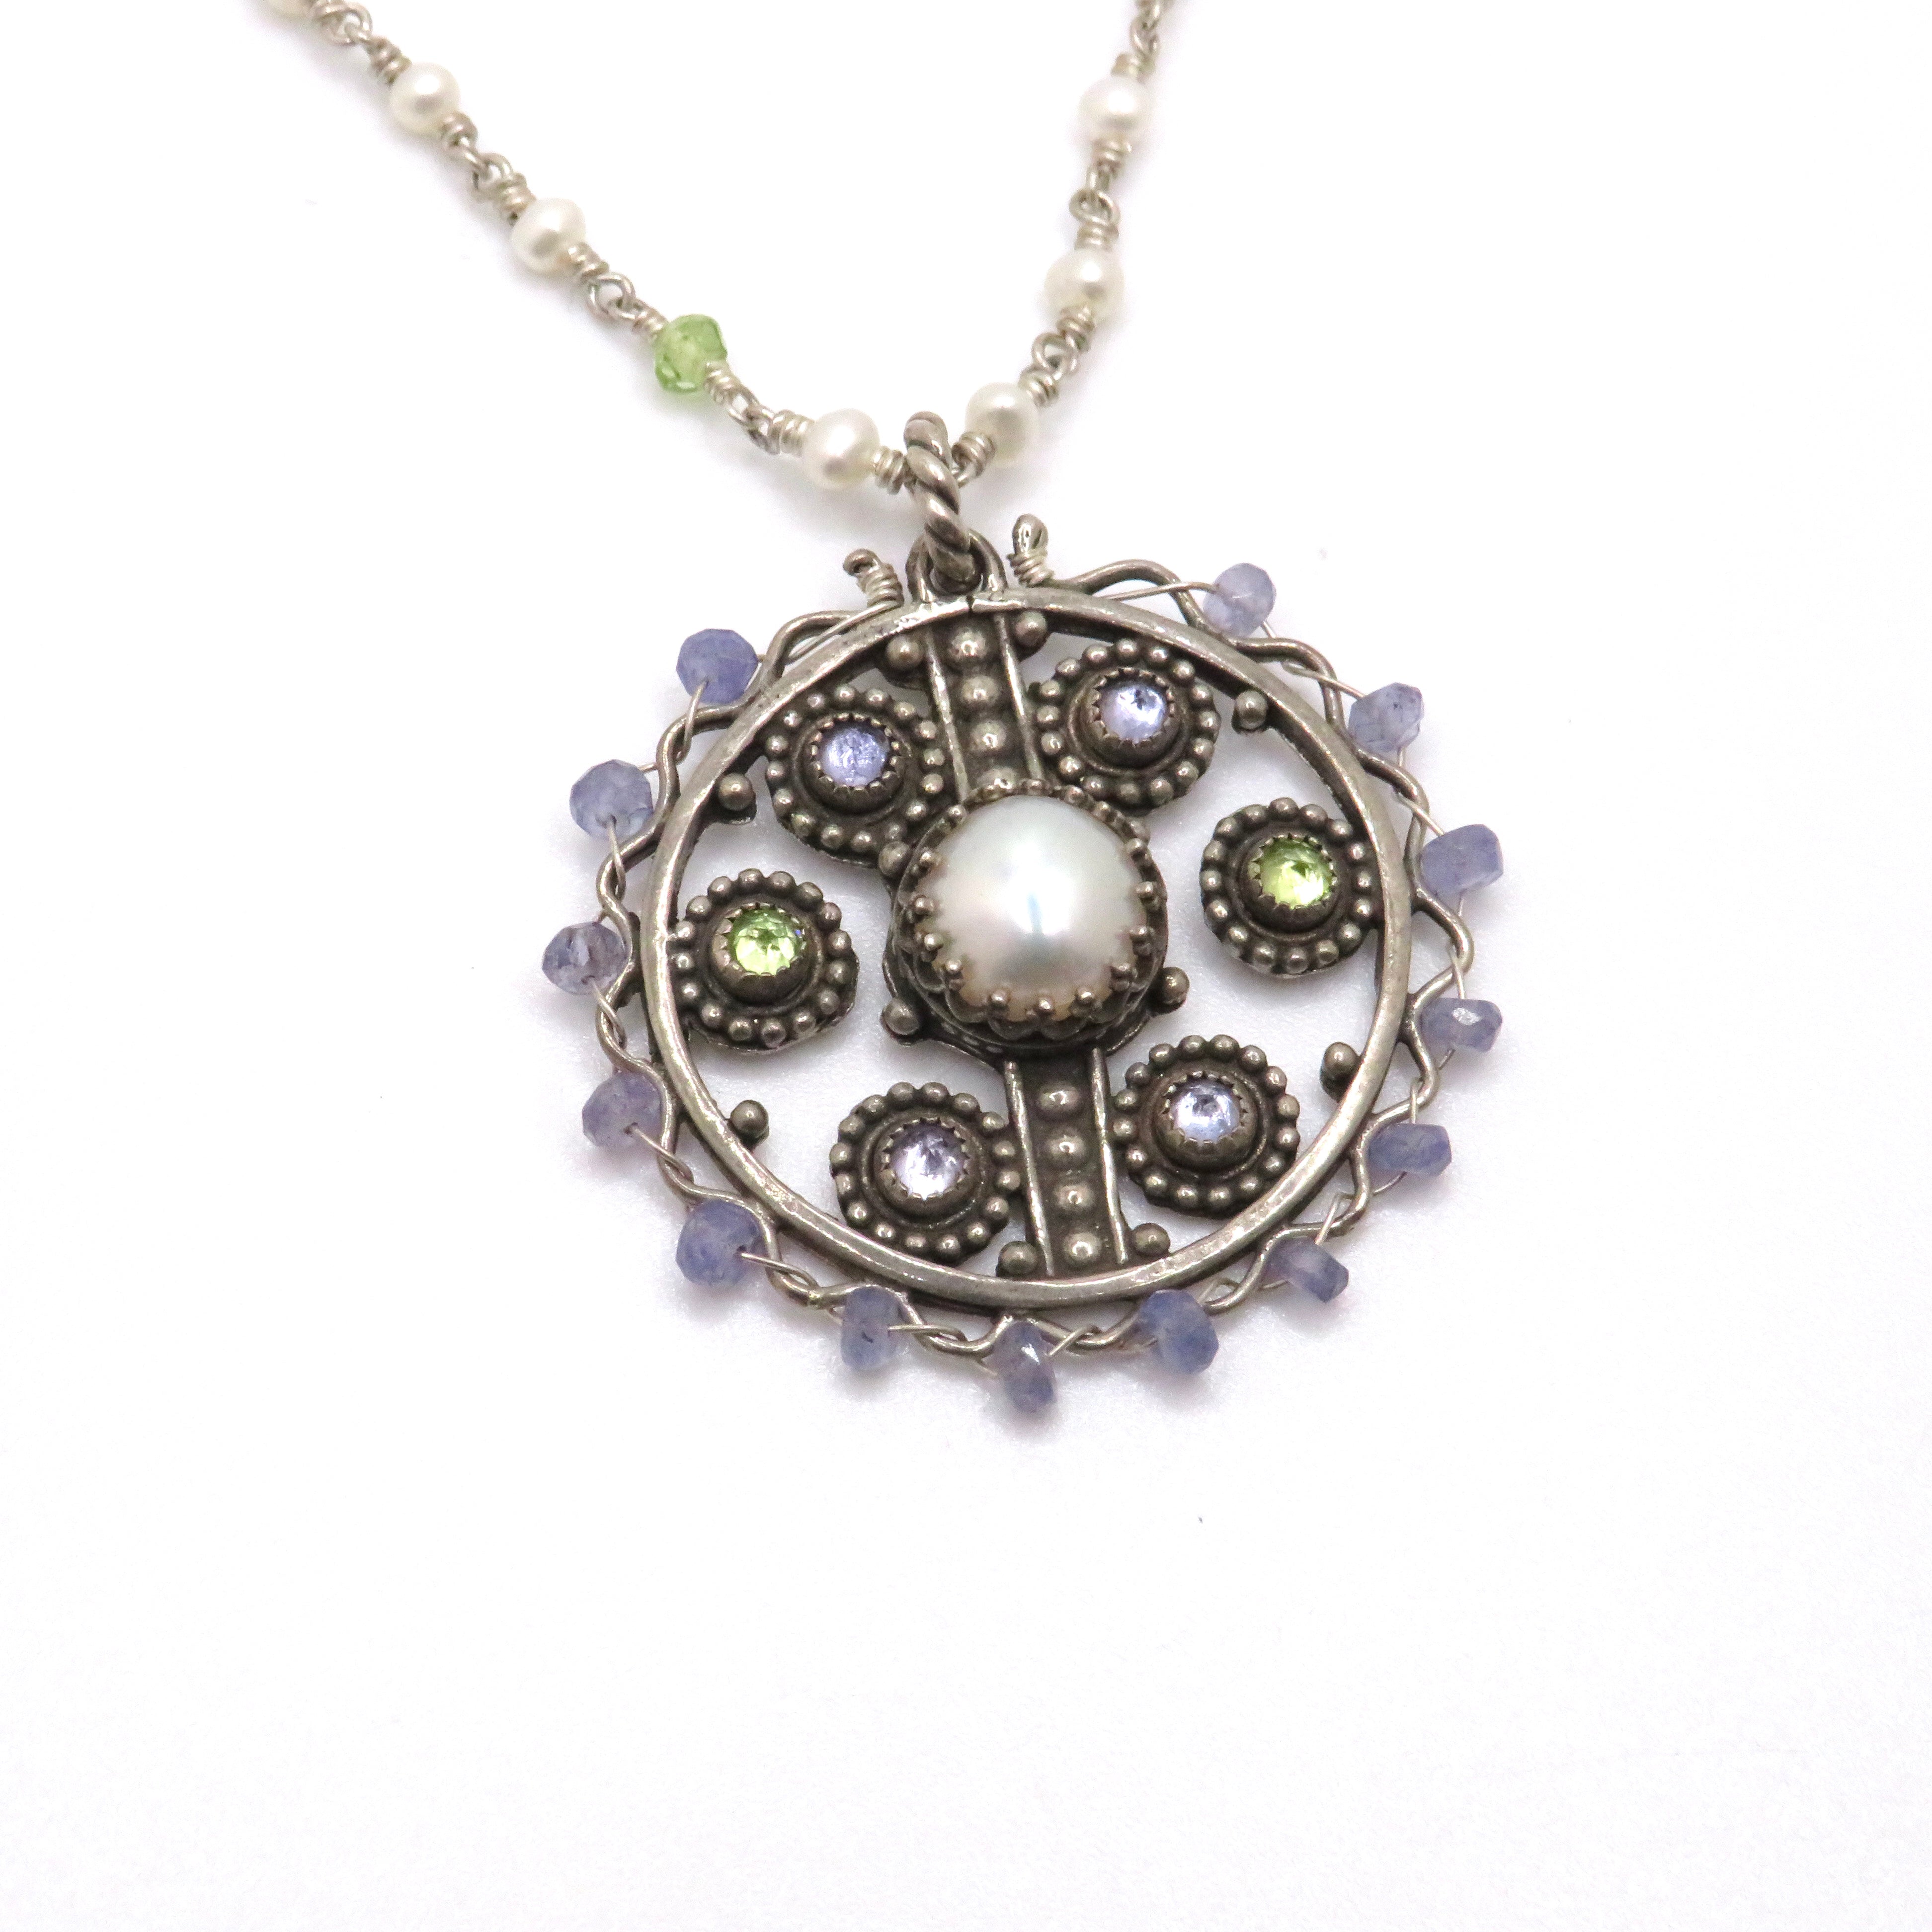 stone pendant necklace